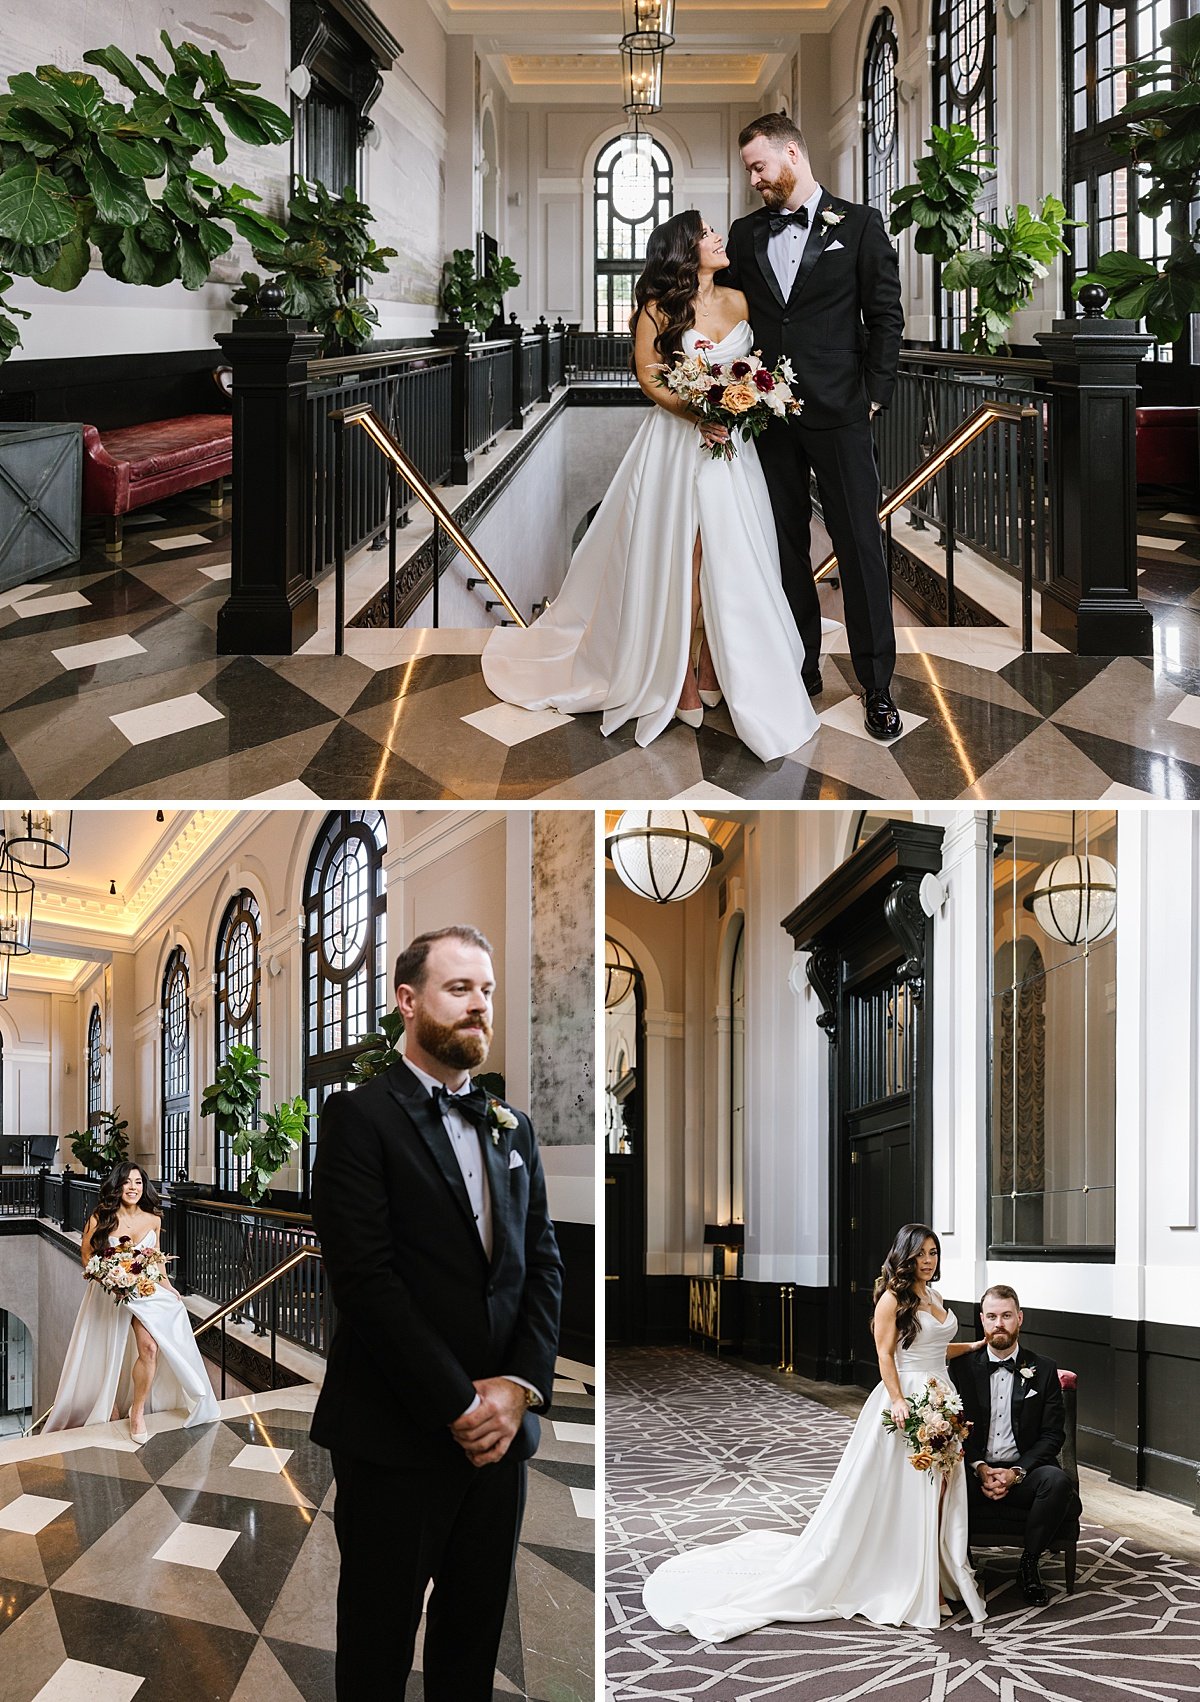 Top 10 Best Wedding Dress and Bridal Bouquet Pairings / Blog / Casablanca  Bridal